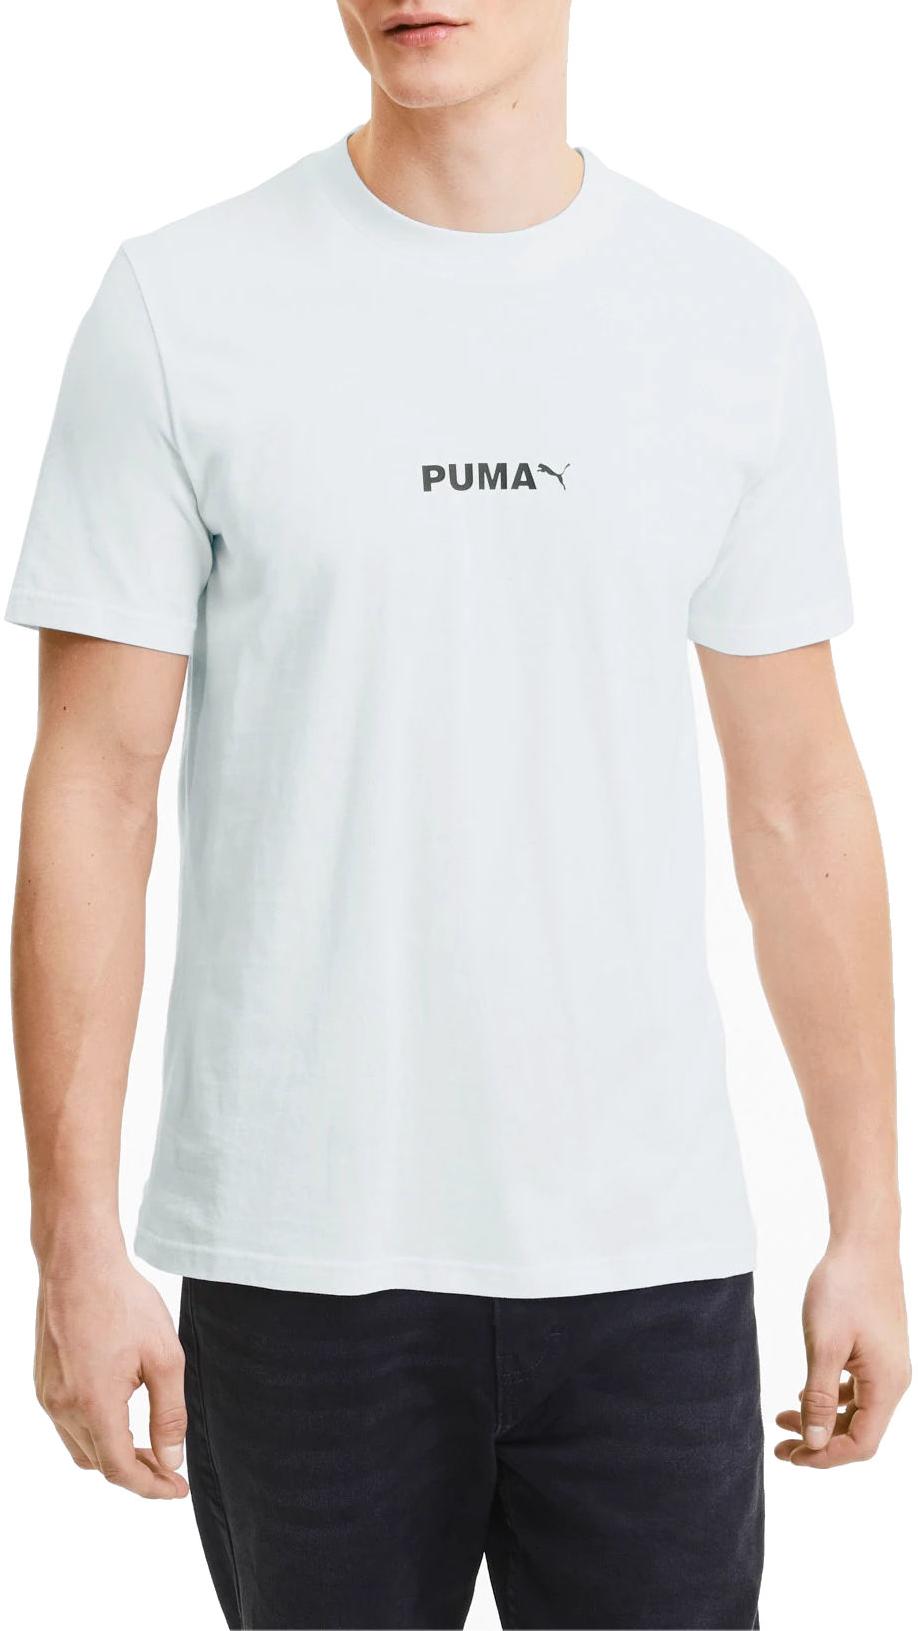 Tee-shirt Puma Avenir Graphic Tee